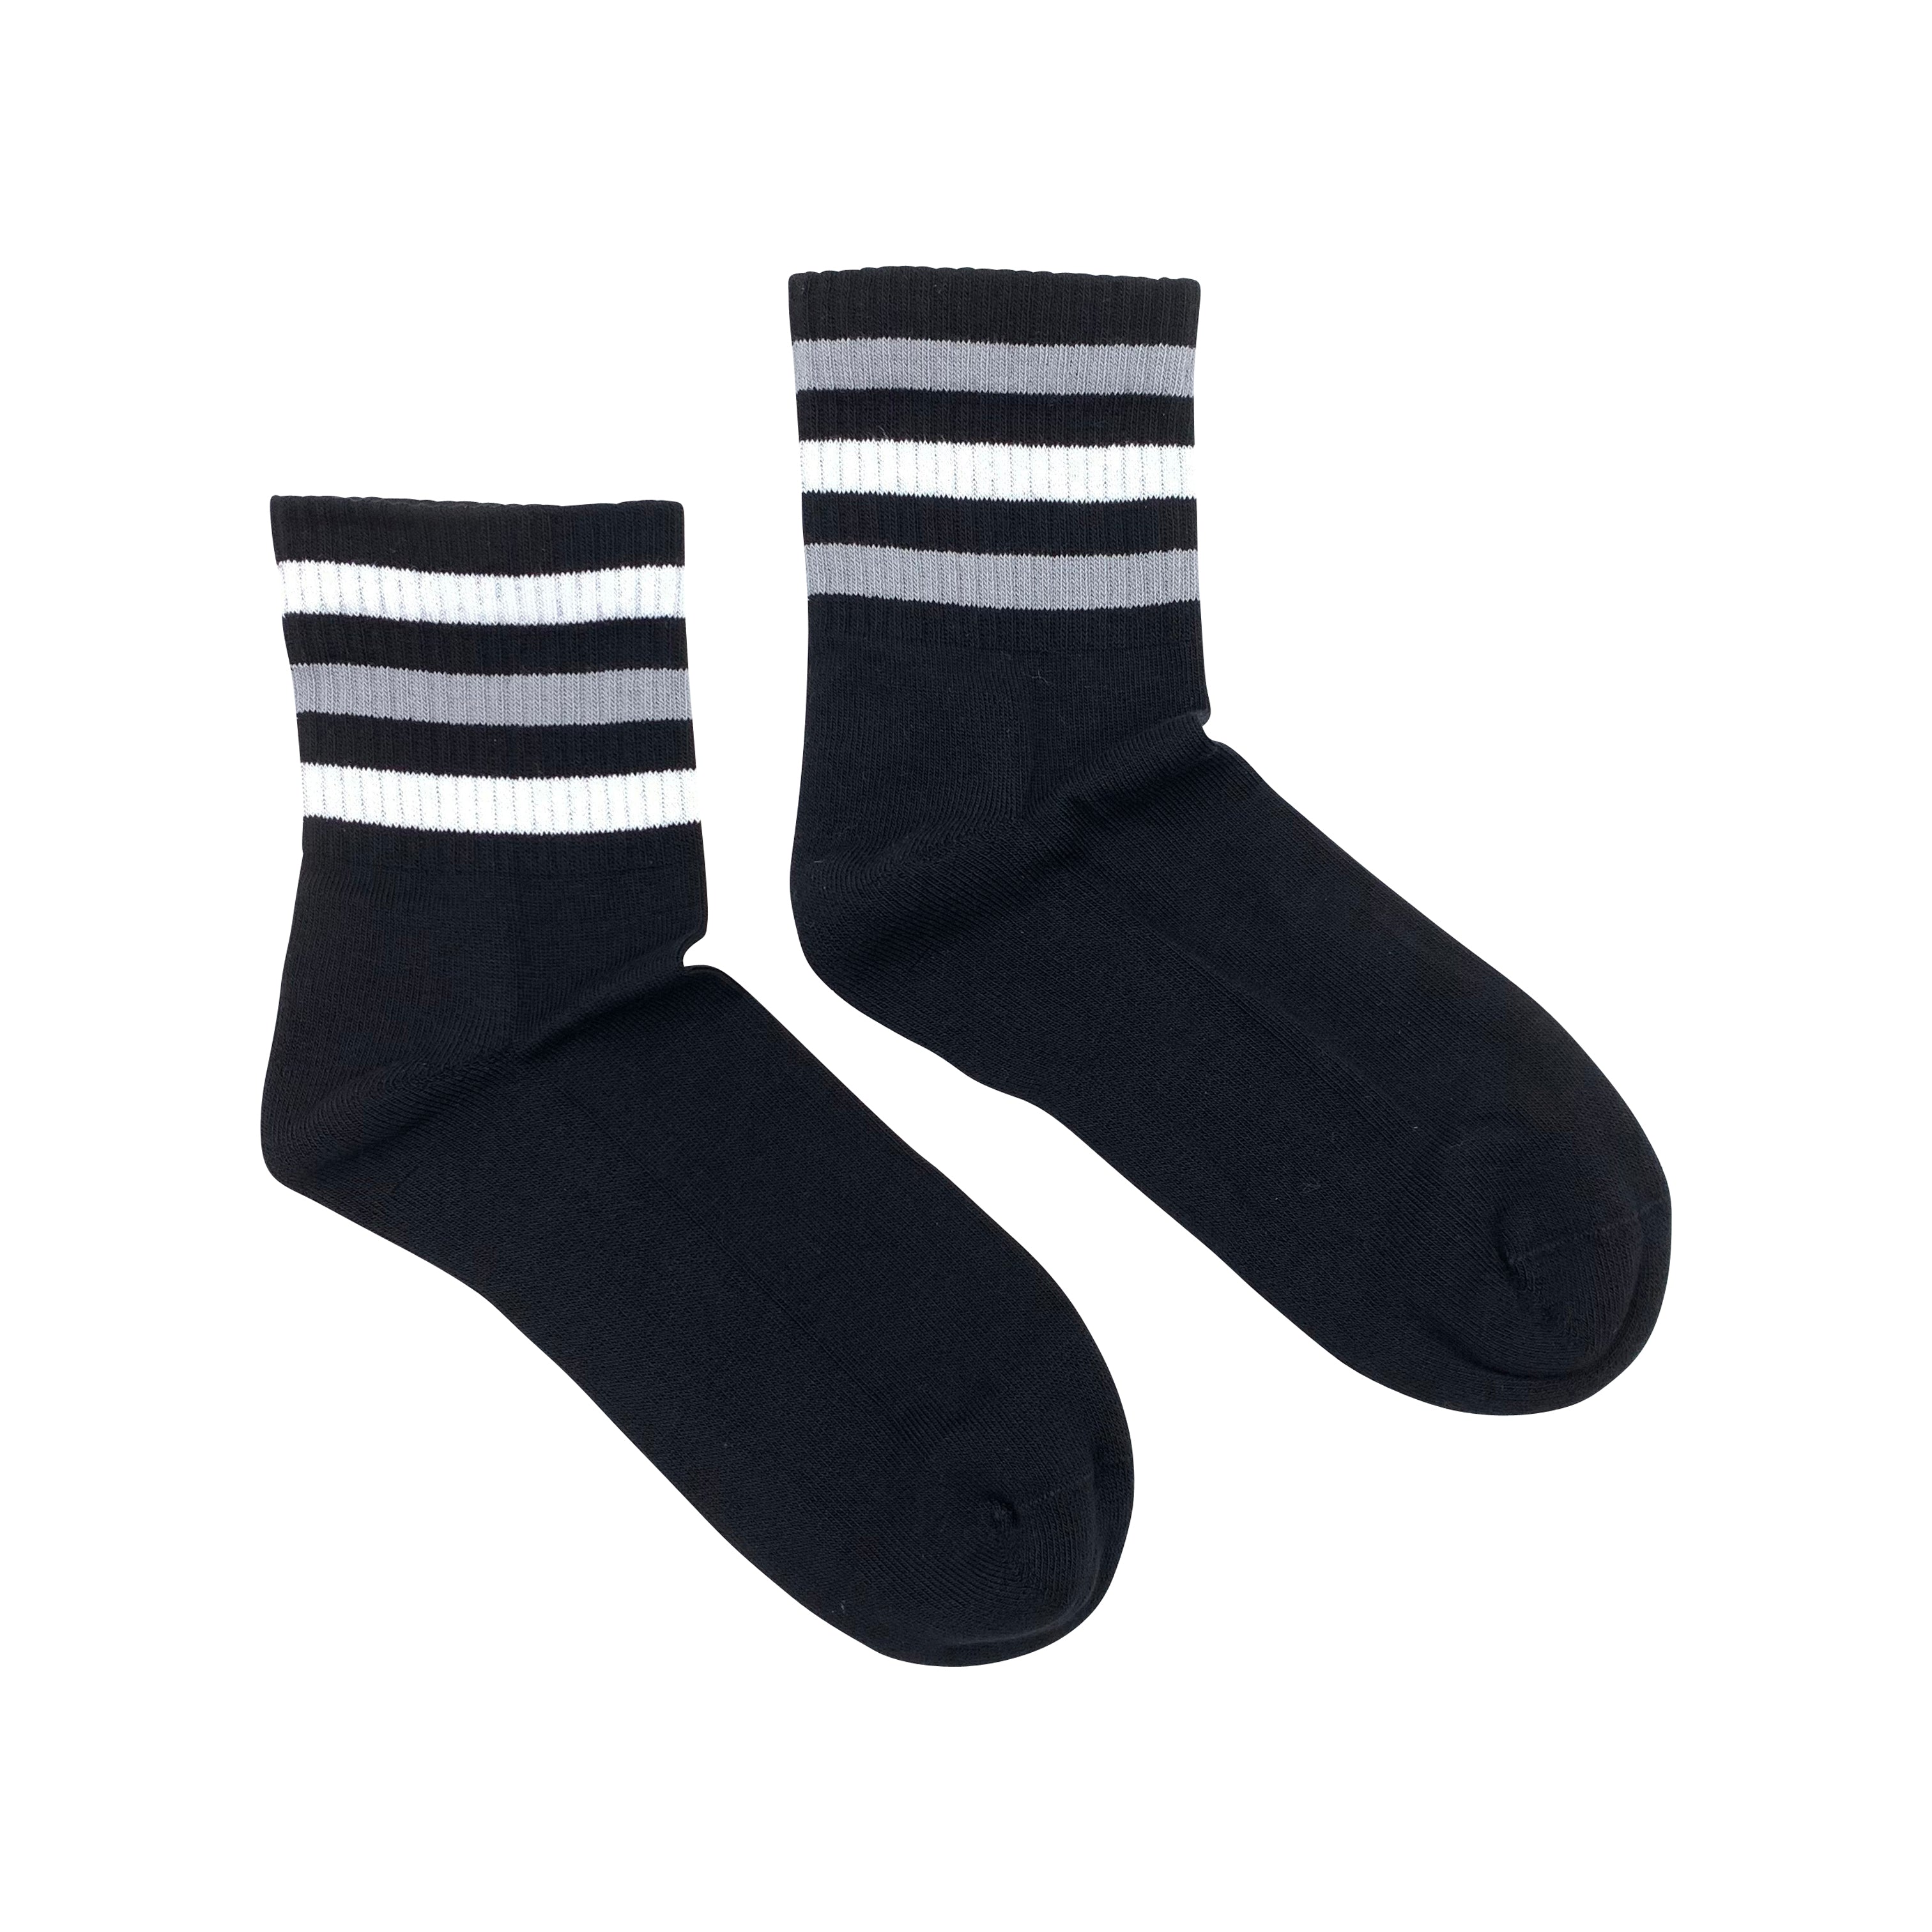 Women's Rebel Athletic Socks, Mismatched by Design